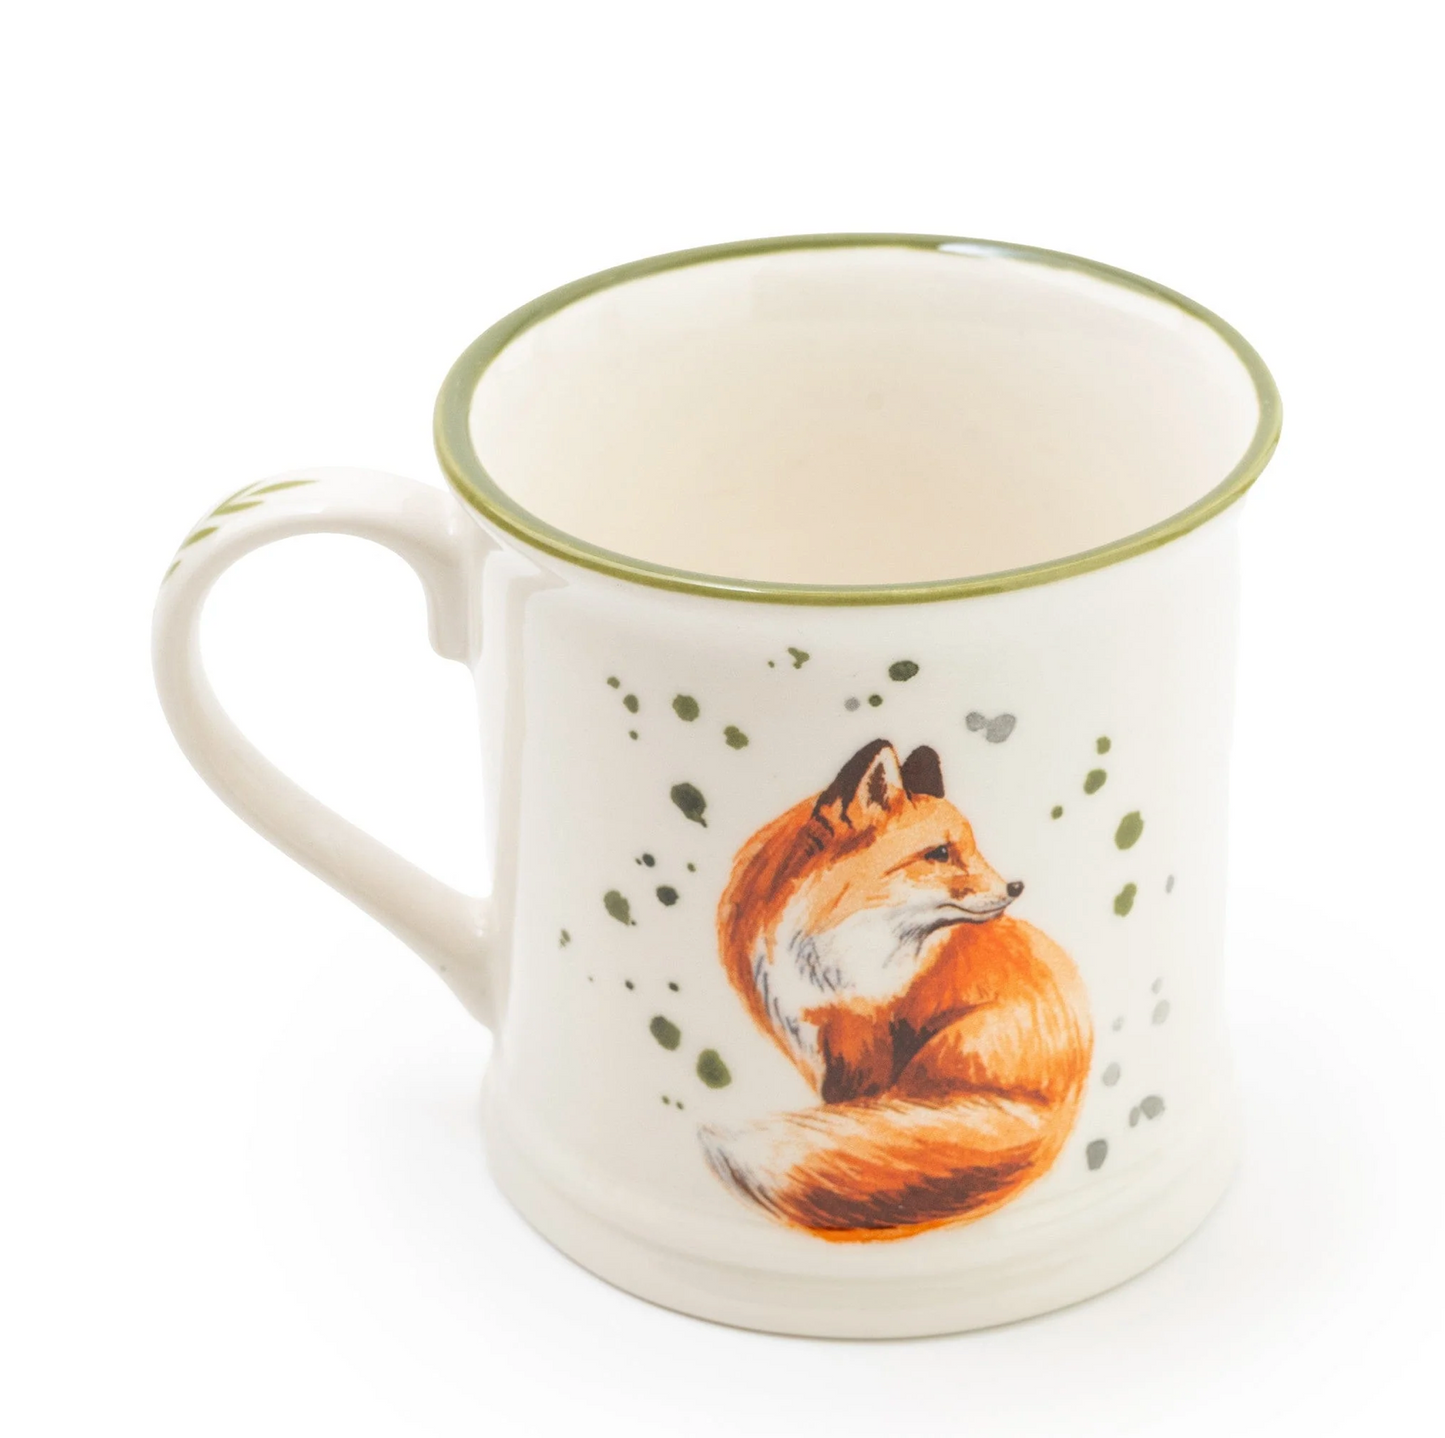 Rustic Country ceramic Tankard Mug, Fox